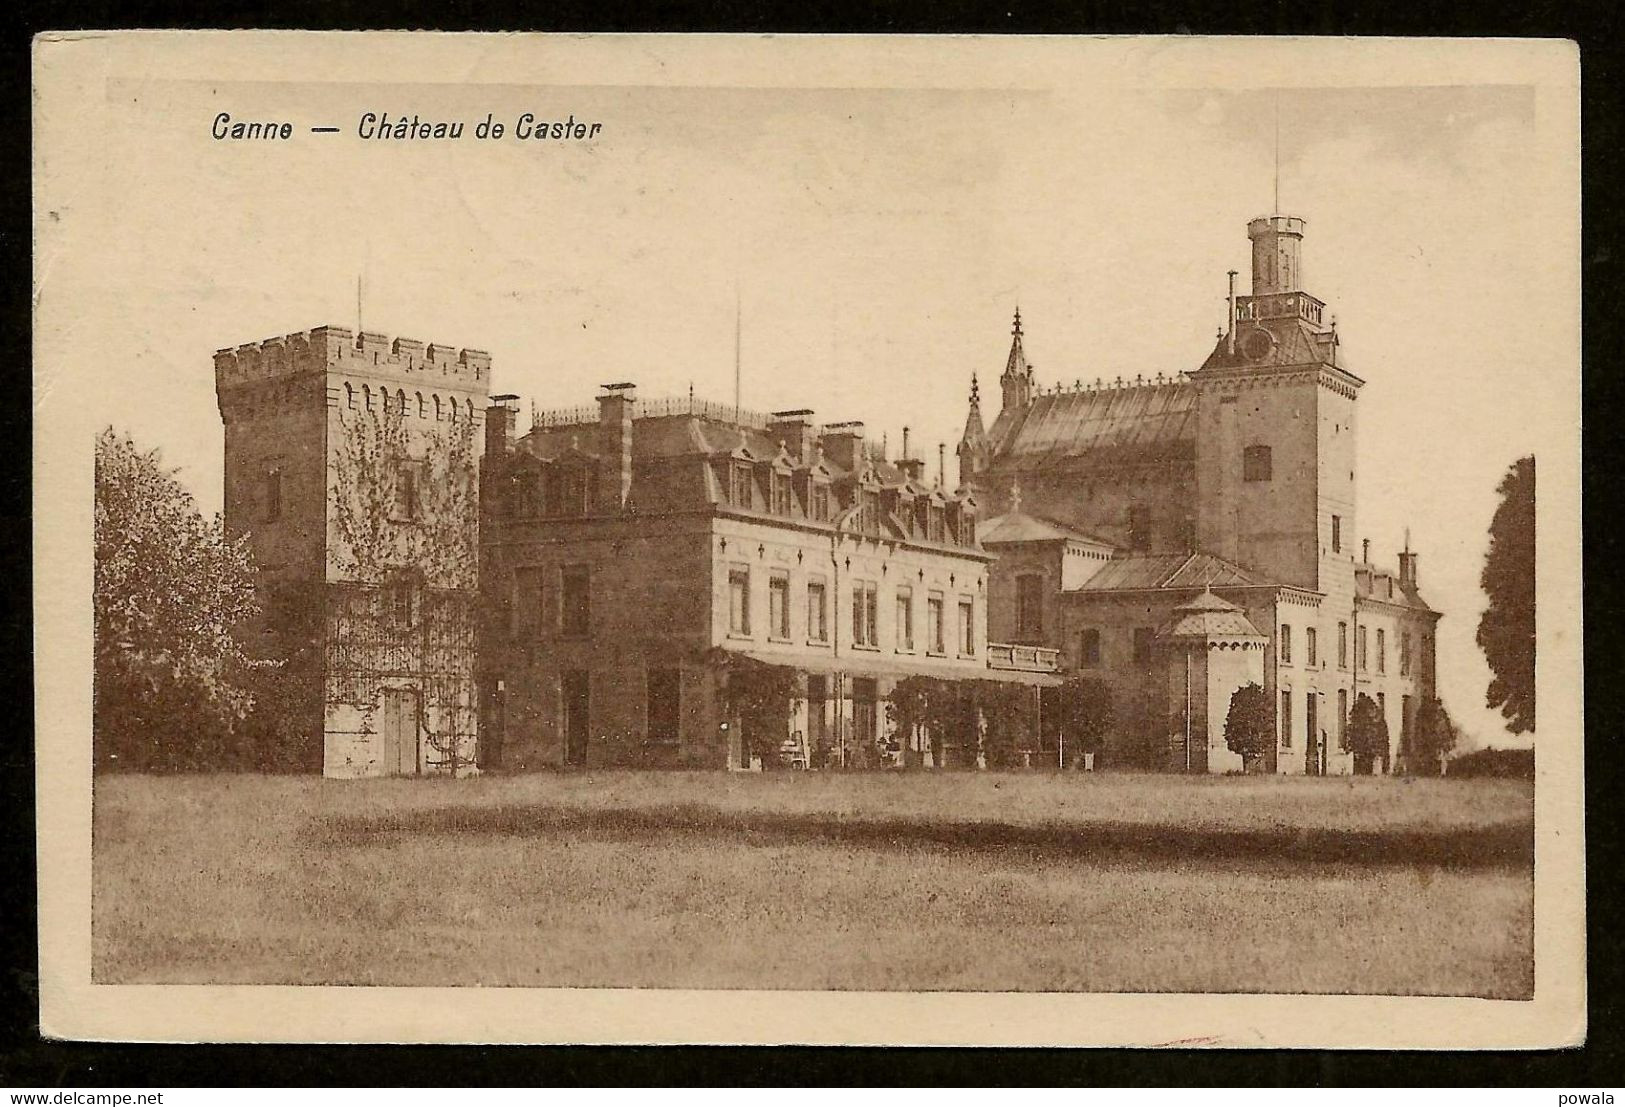 Kanne : Relais Canne Sterstempel 6 X 1931 Op Zichtkaart Chateau De Caster - Riemst